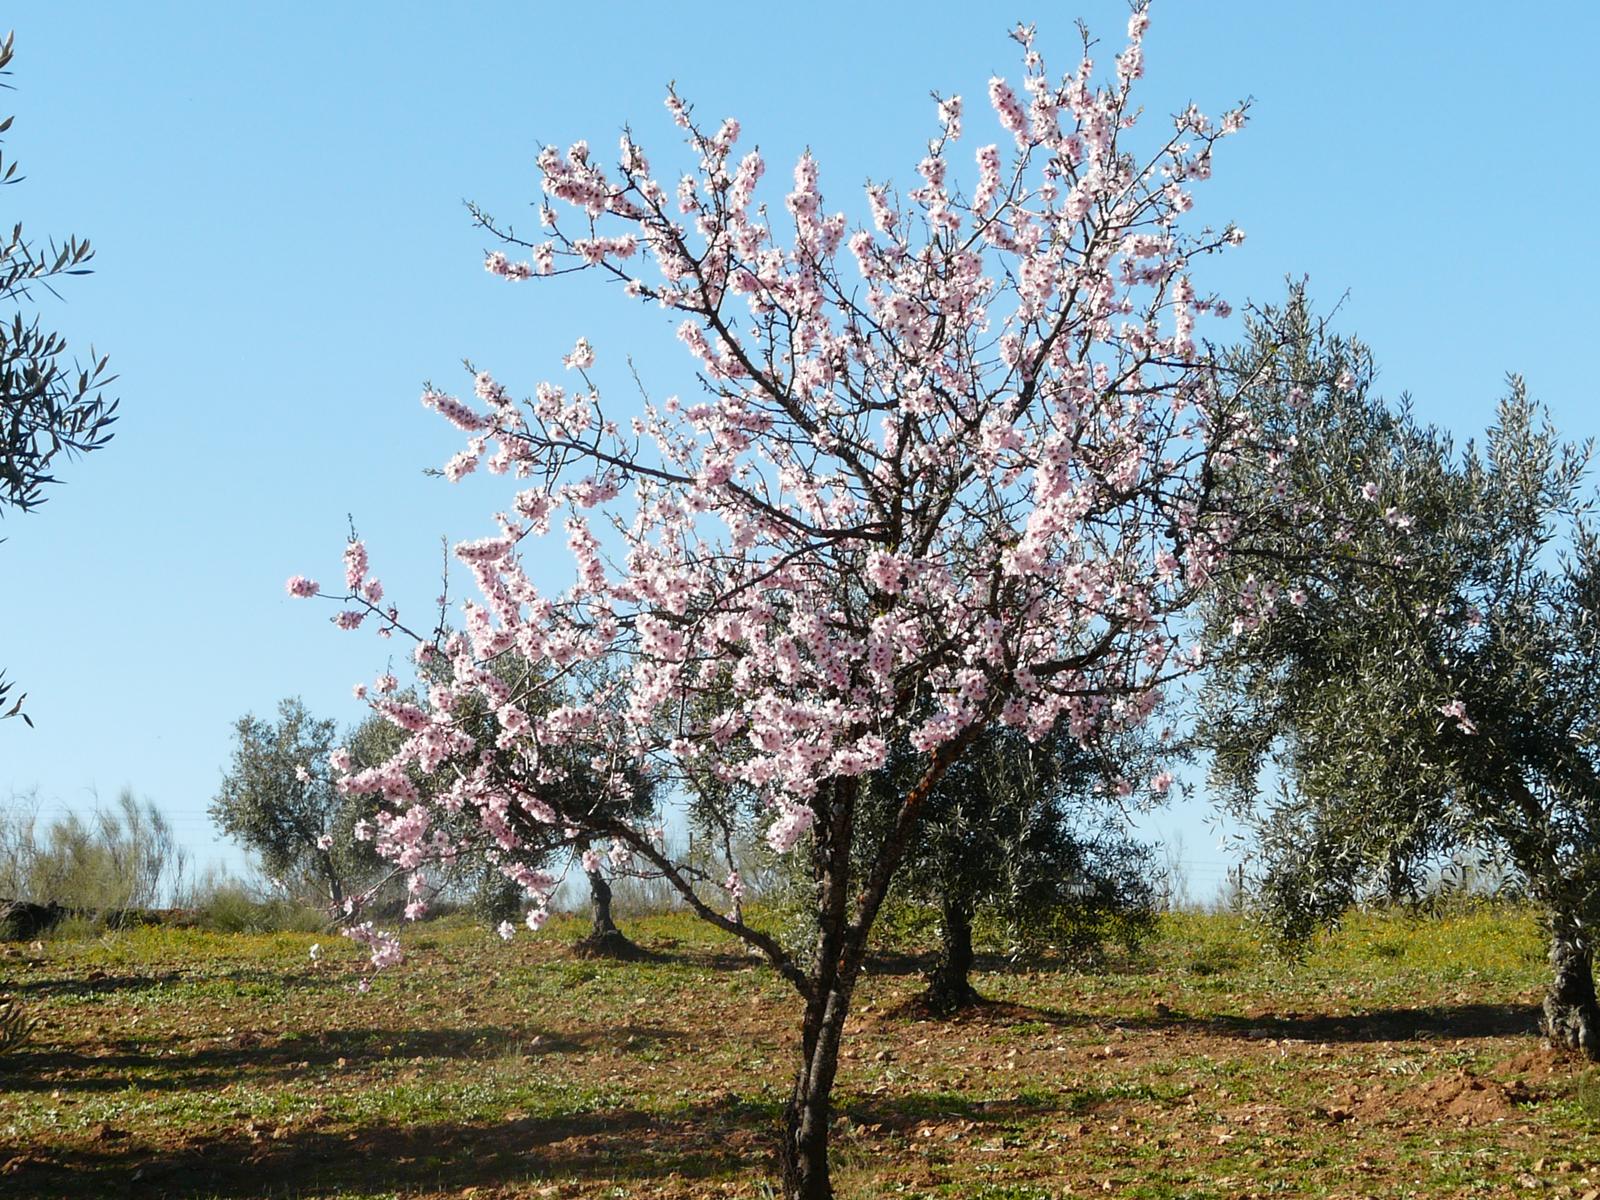 File:Almendro en flor (1).jpg - Wikimedia Commons